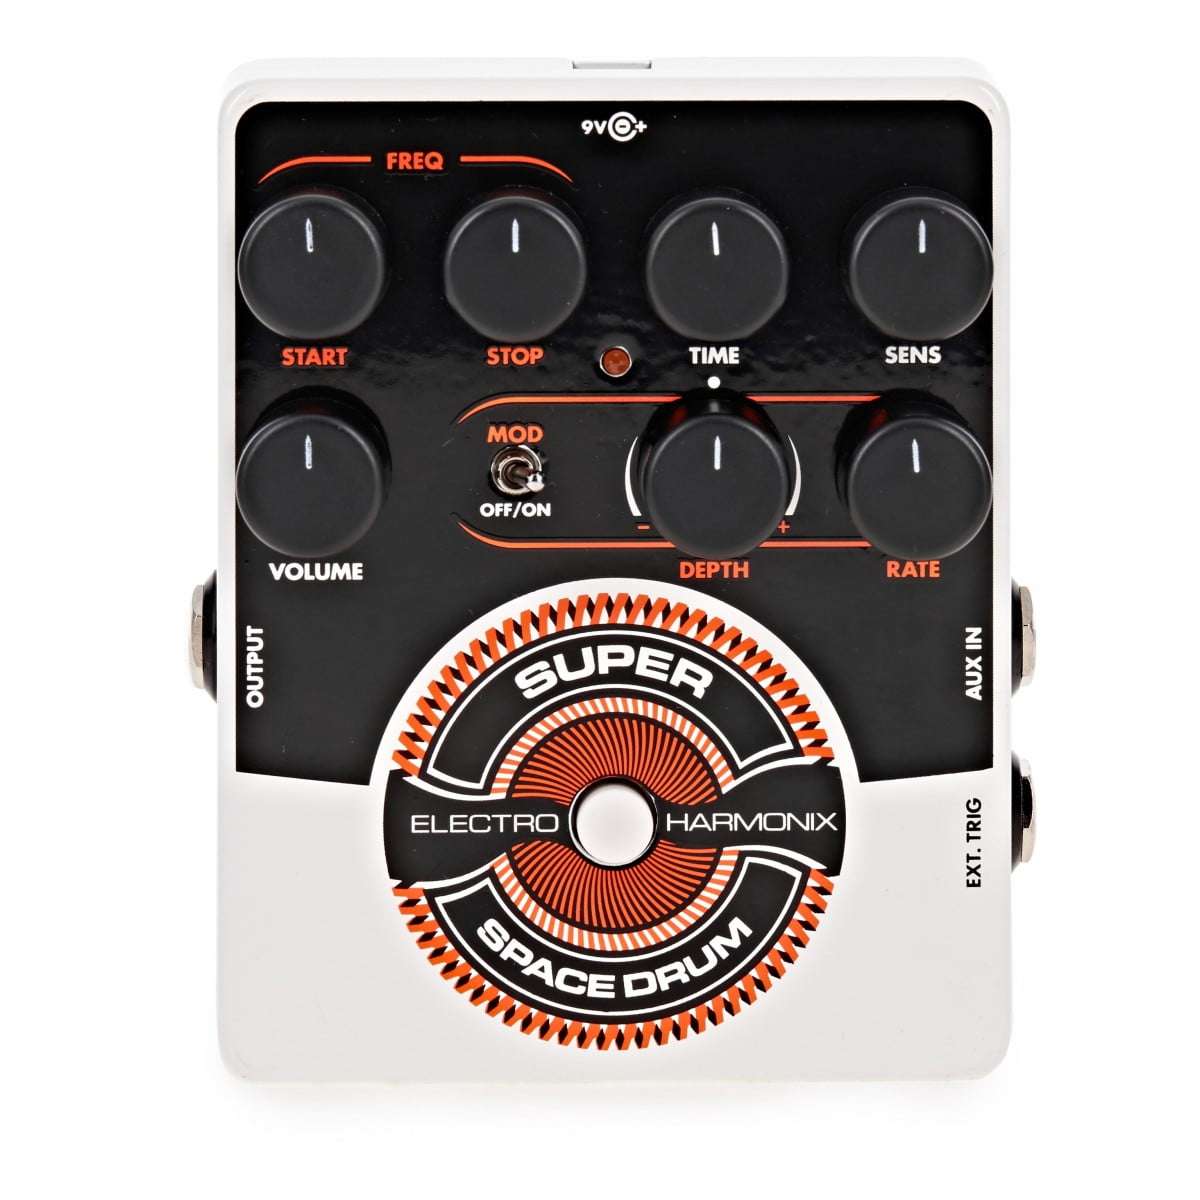 Electro Harmonix Super Space Drum Analog Drum Synthesizer - New Electro Harmonix   Noise Gate       Analogue         Guitar Effect Pedal